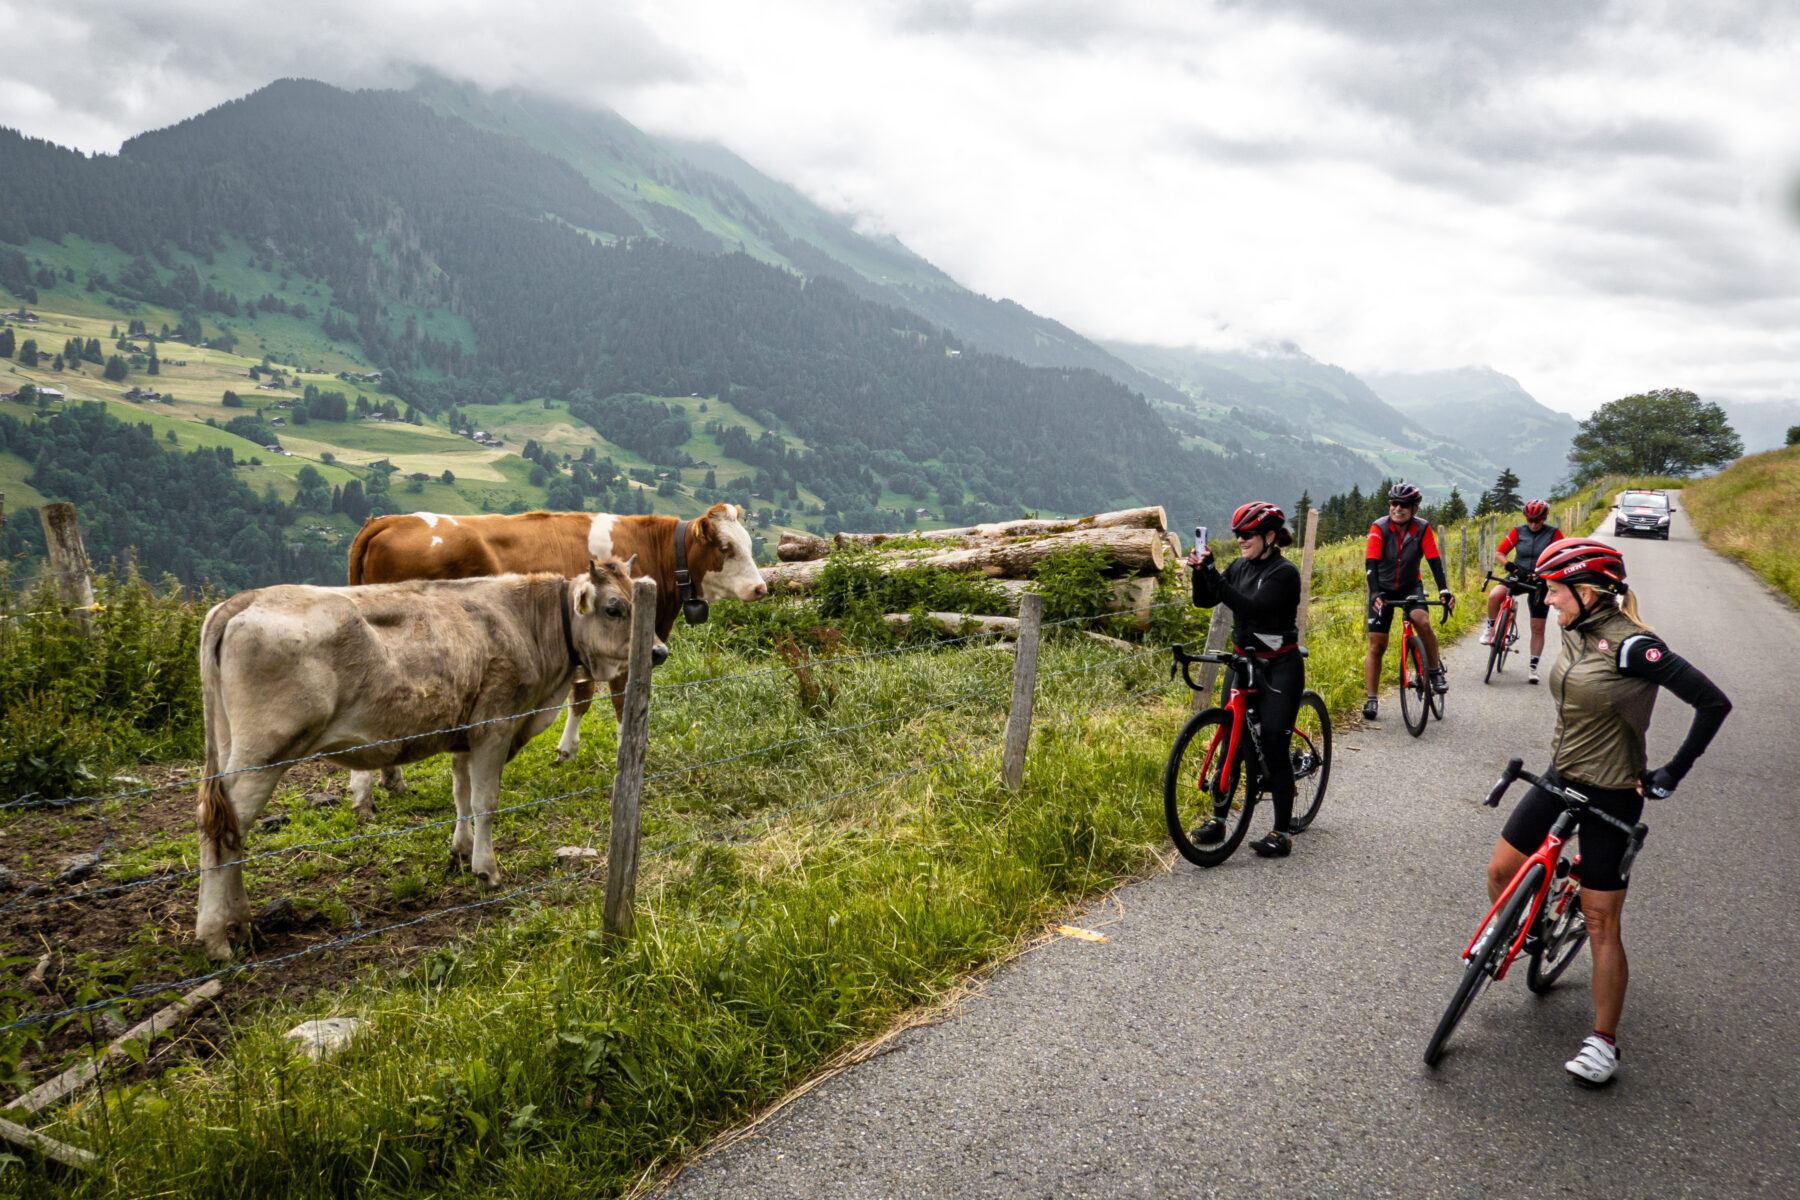 cyclists & cows on roadside